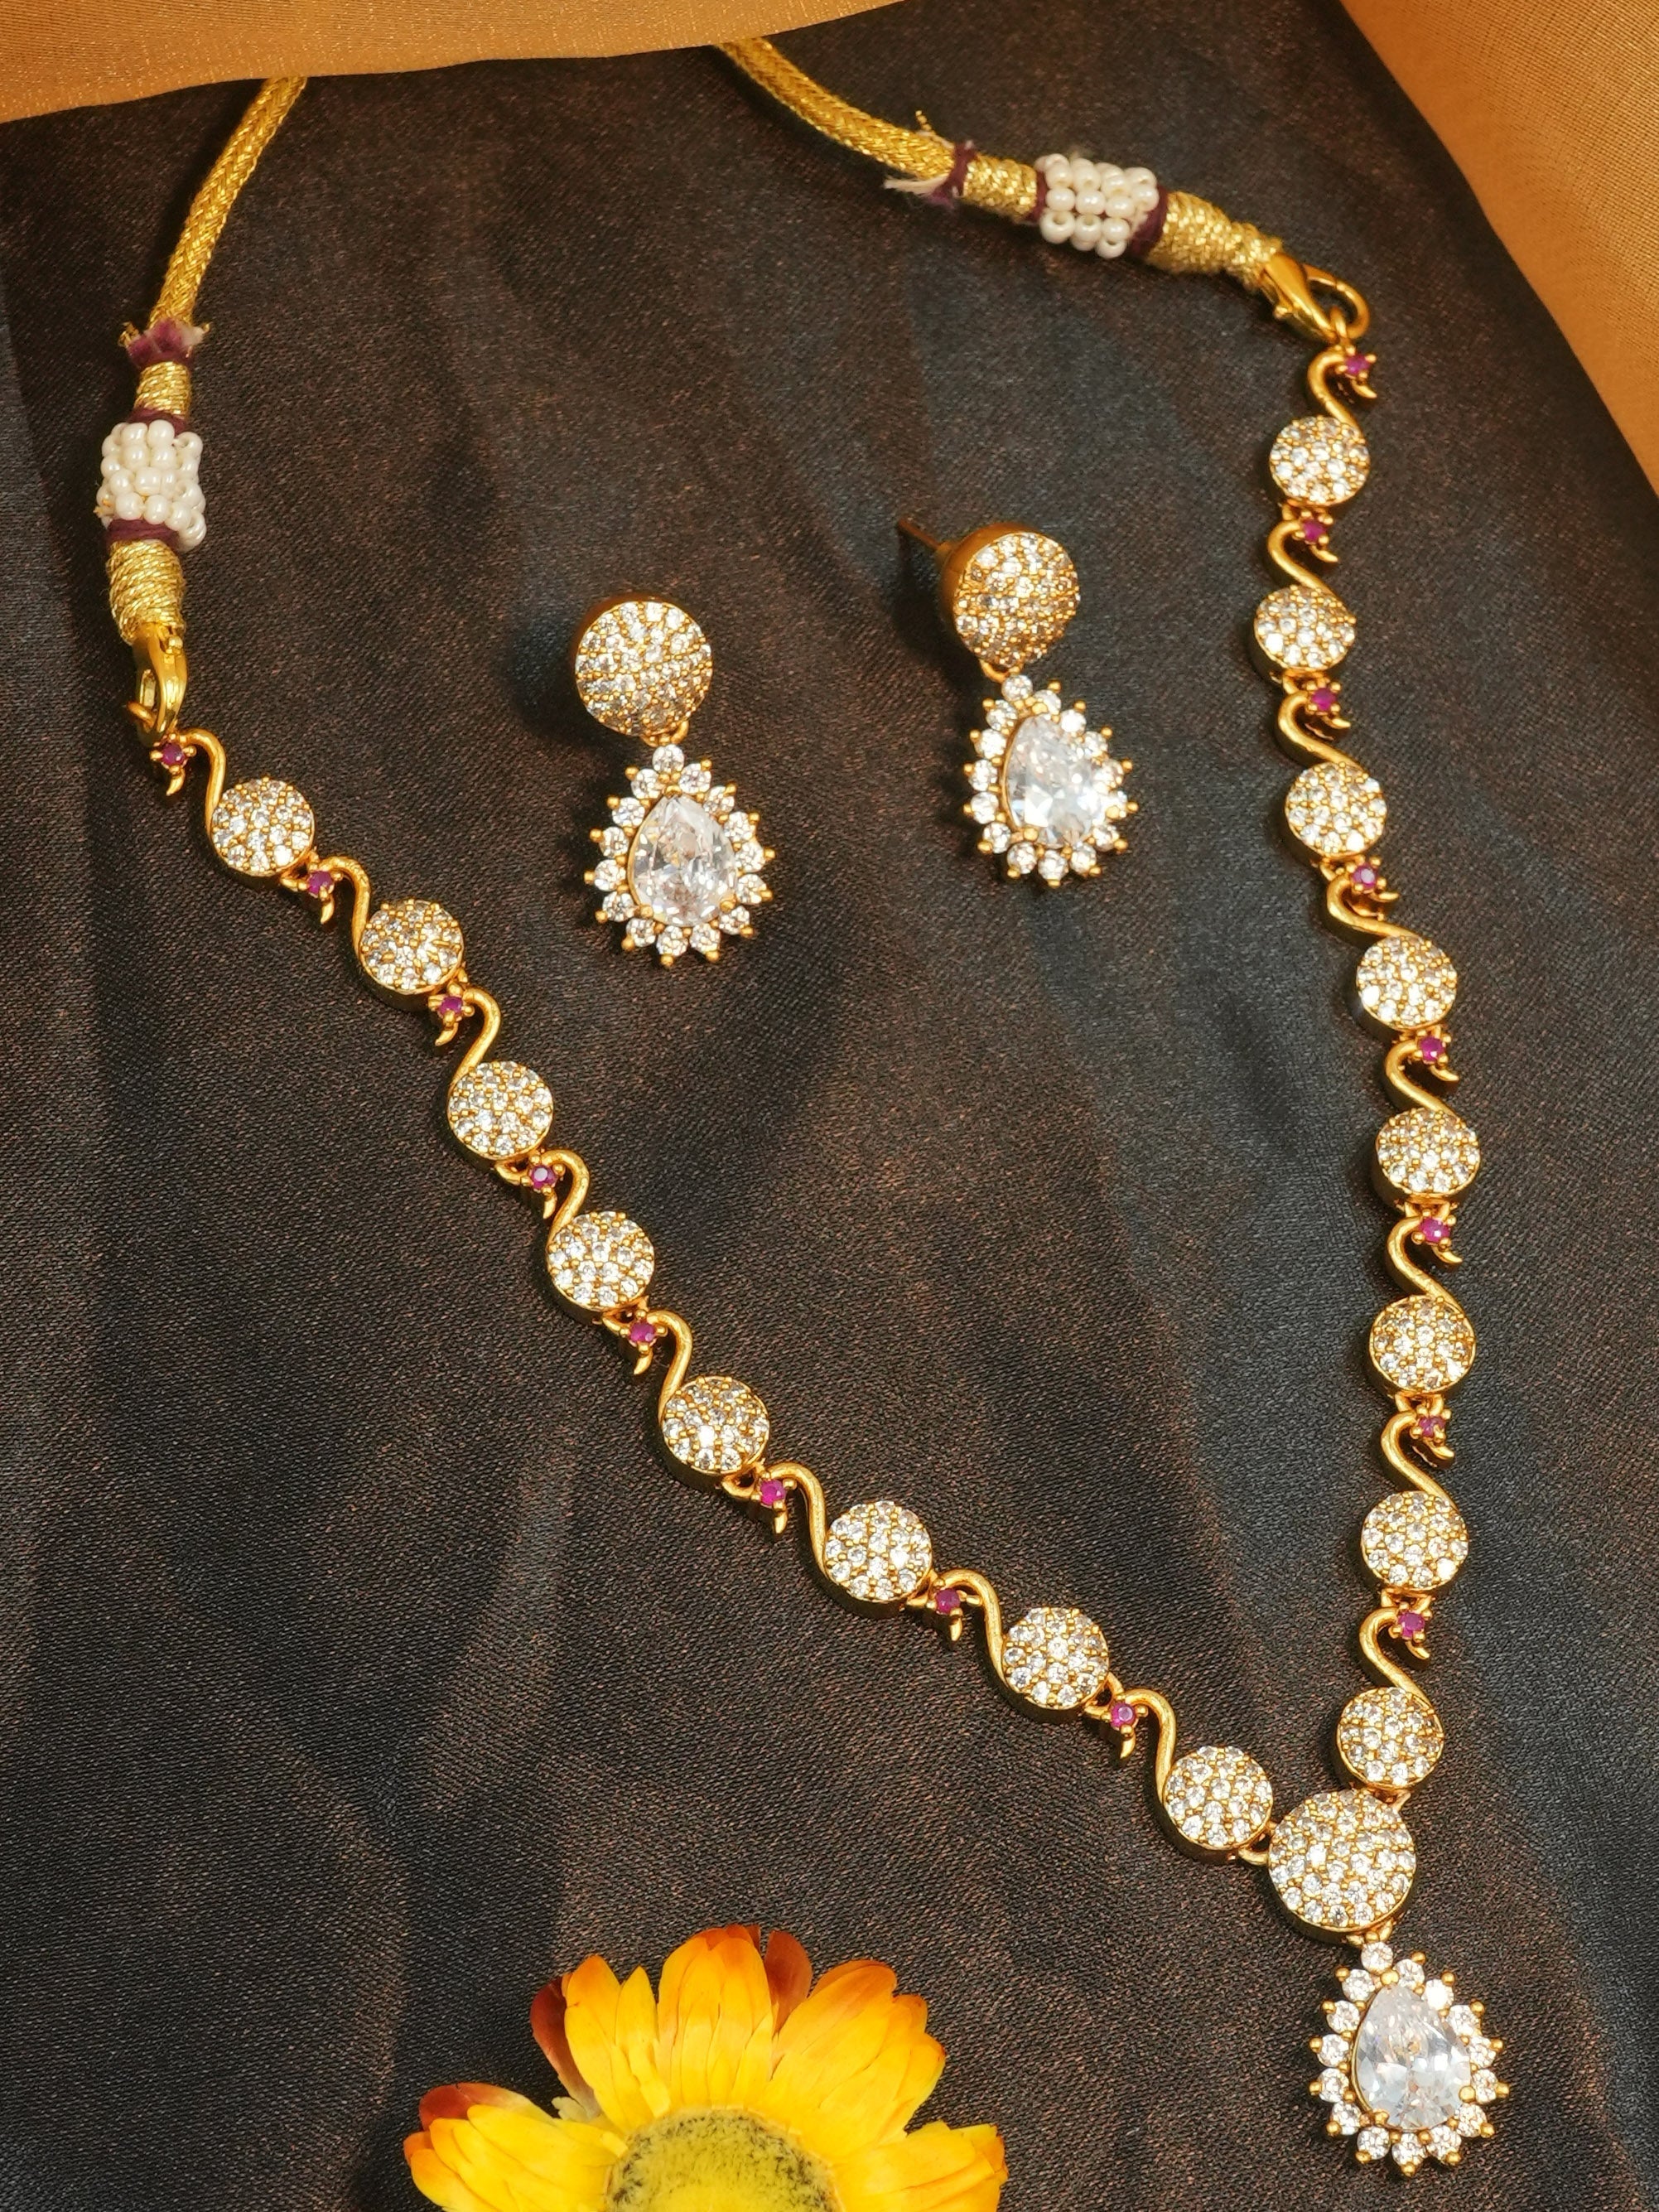 Sayara Collection Diamond design Full White Cz Necklace Set 8787N